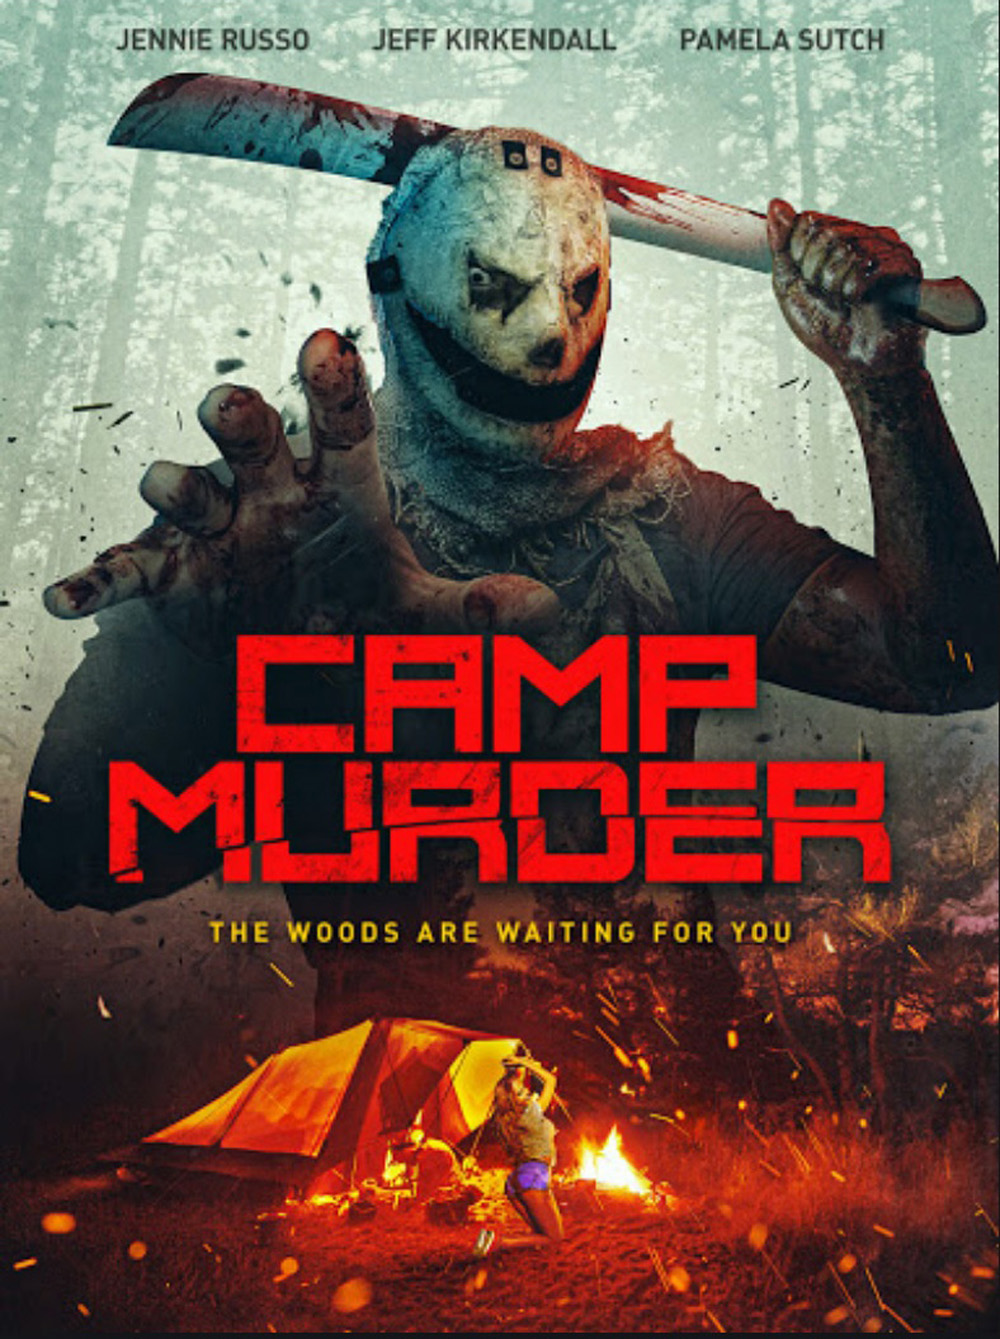 Camp Murder (2021)